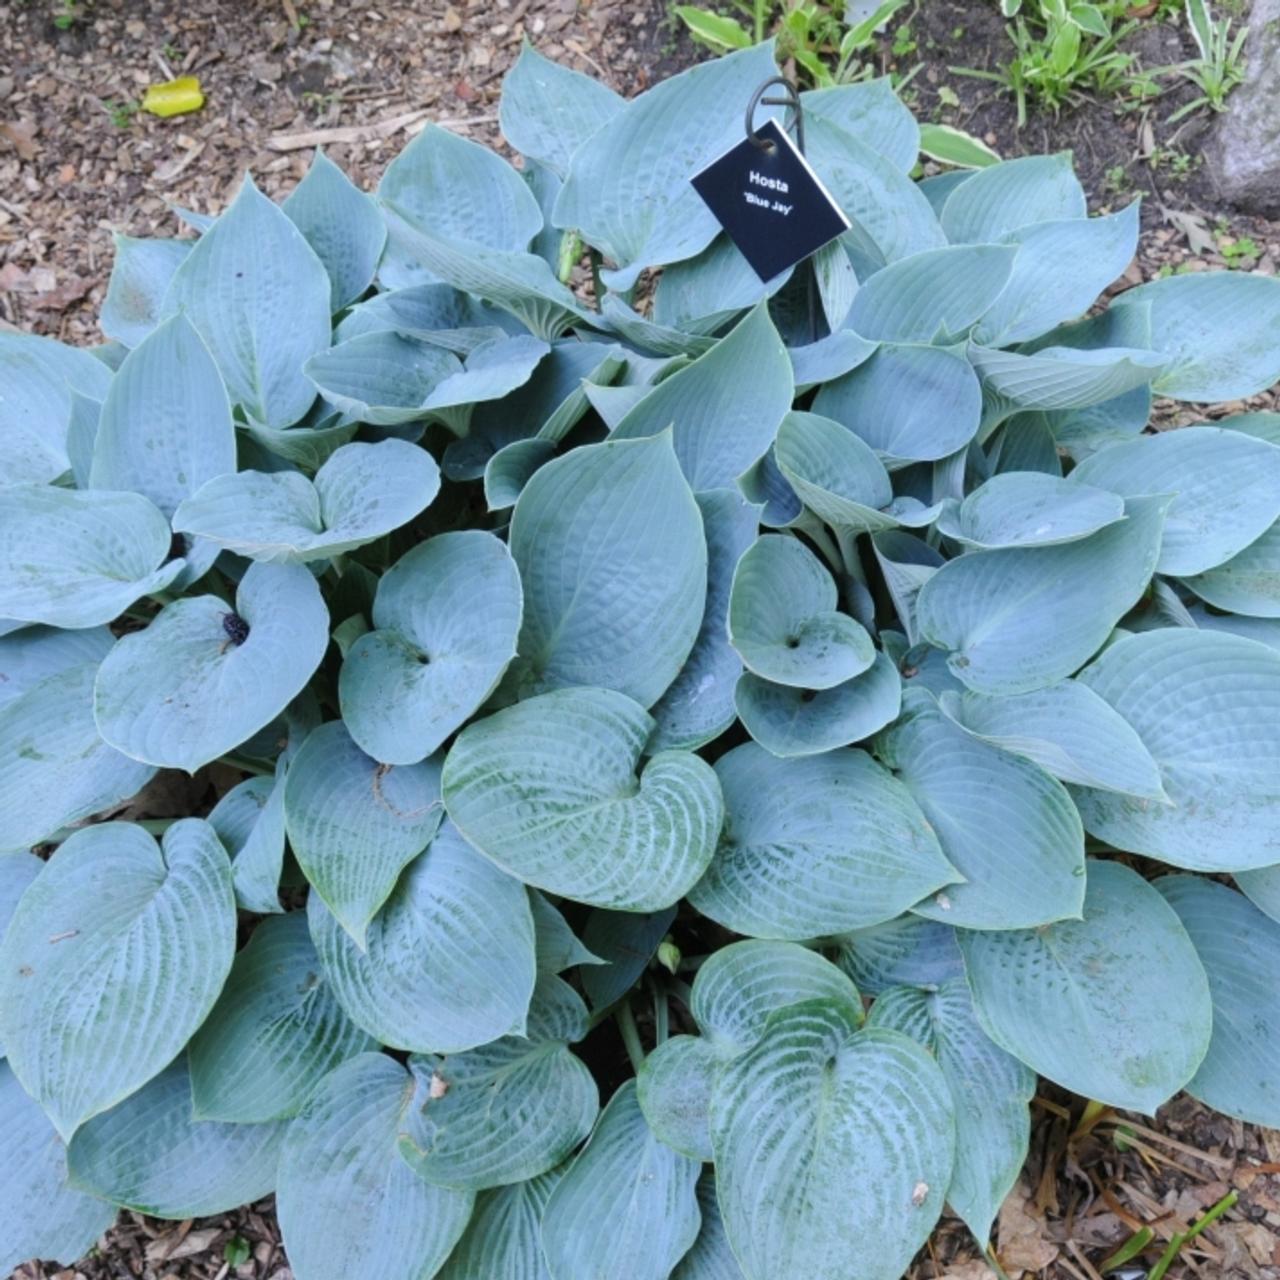 Hosta 'Blue Jay' plant